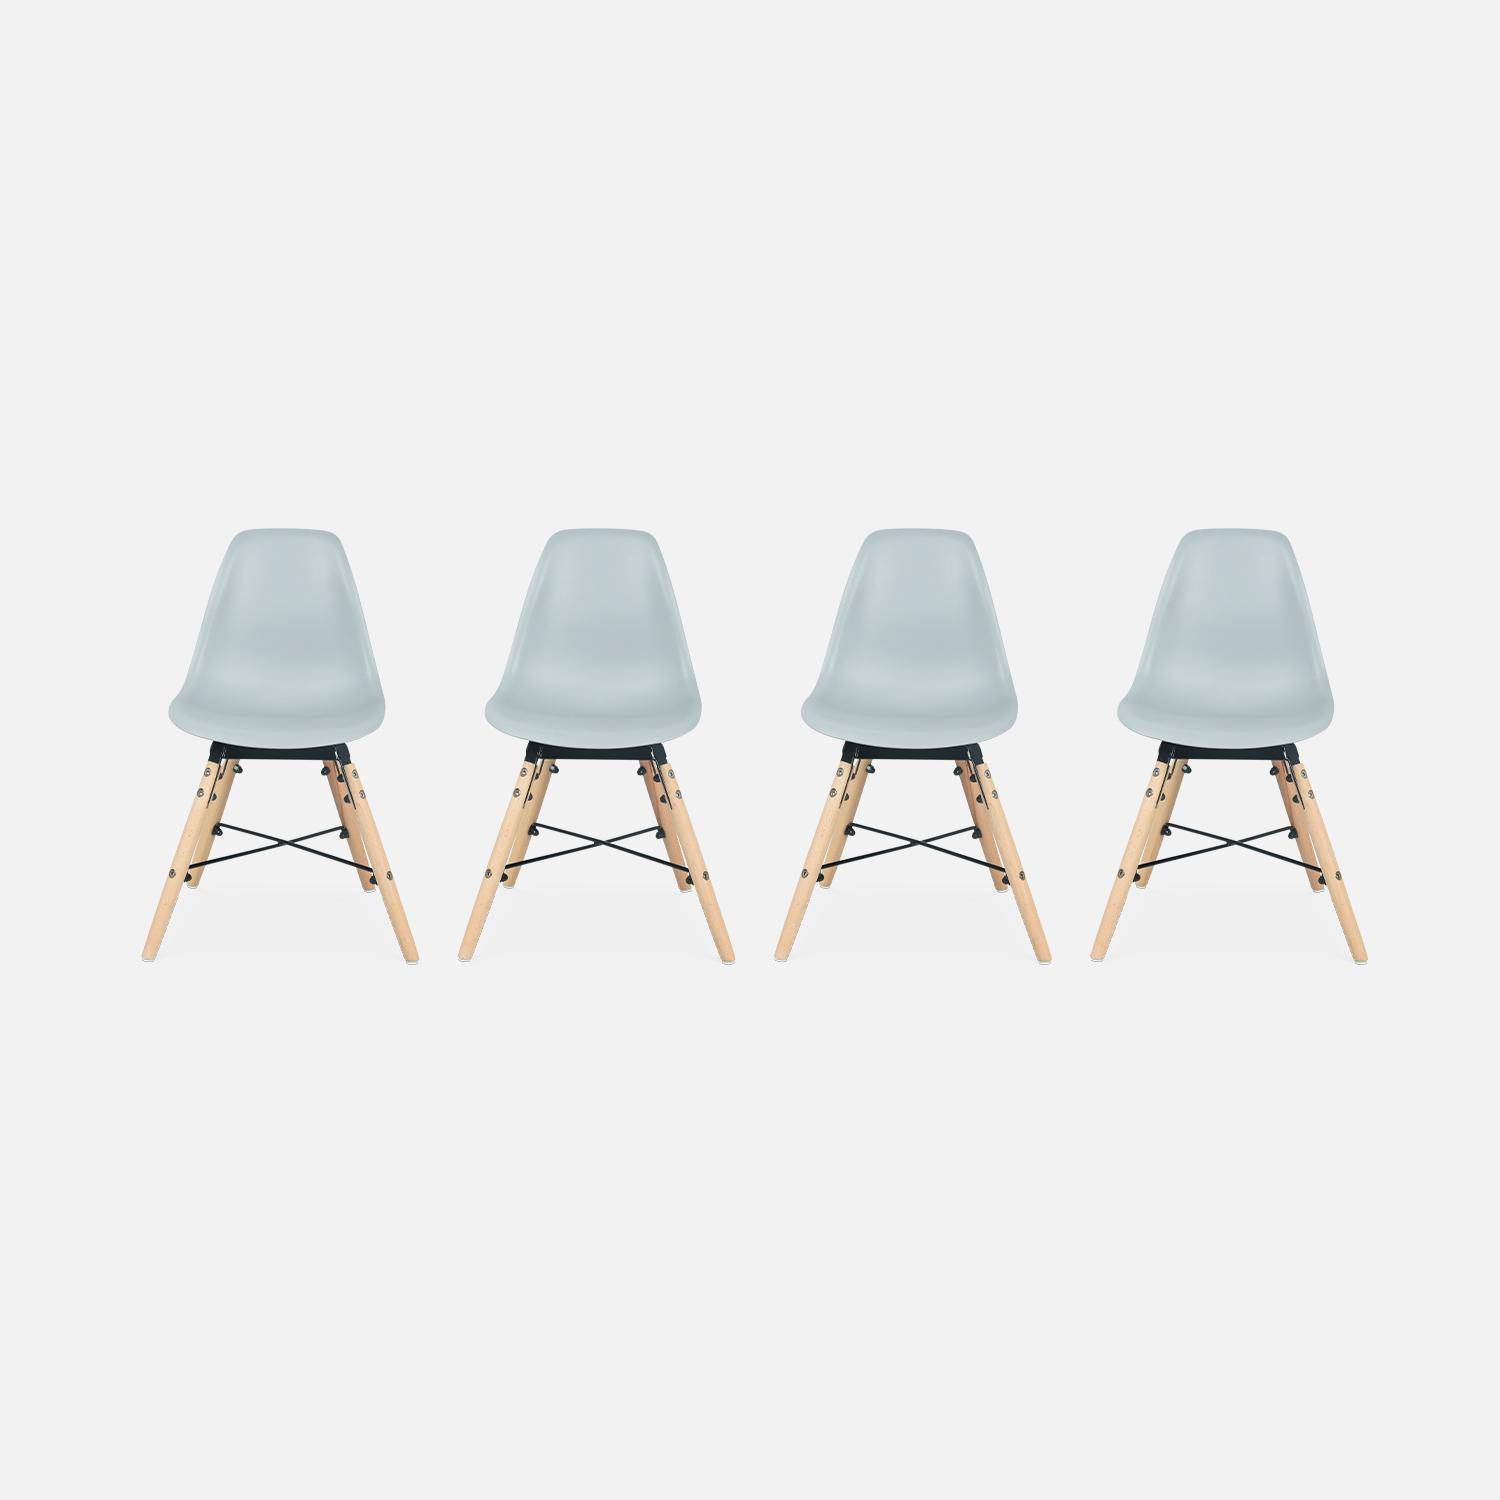 4er-Set Kinderstühle Grau in skandinavischem Stil, Buchenholz, B30,5 x T36 x H56cm, CHARLIE Photo1